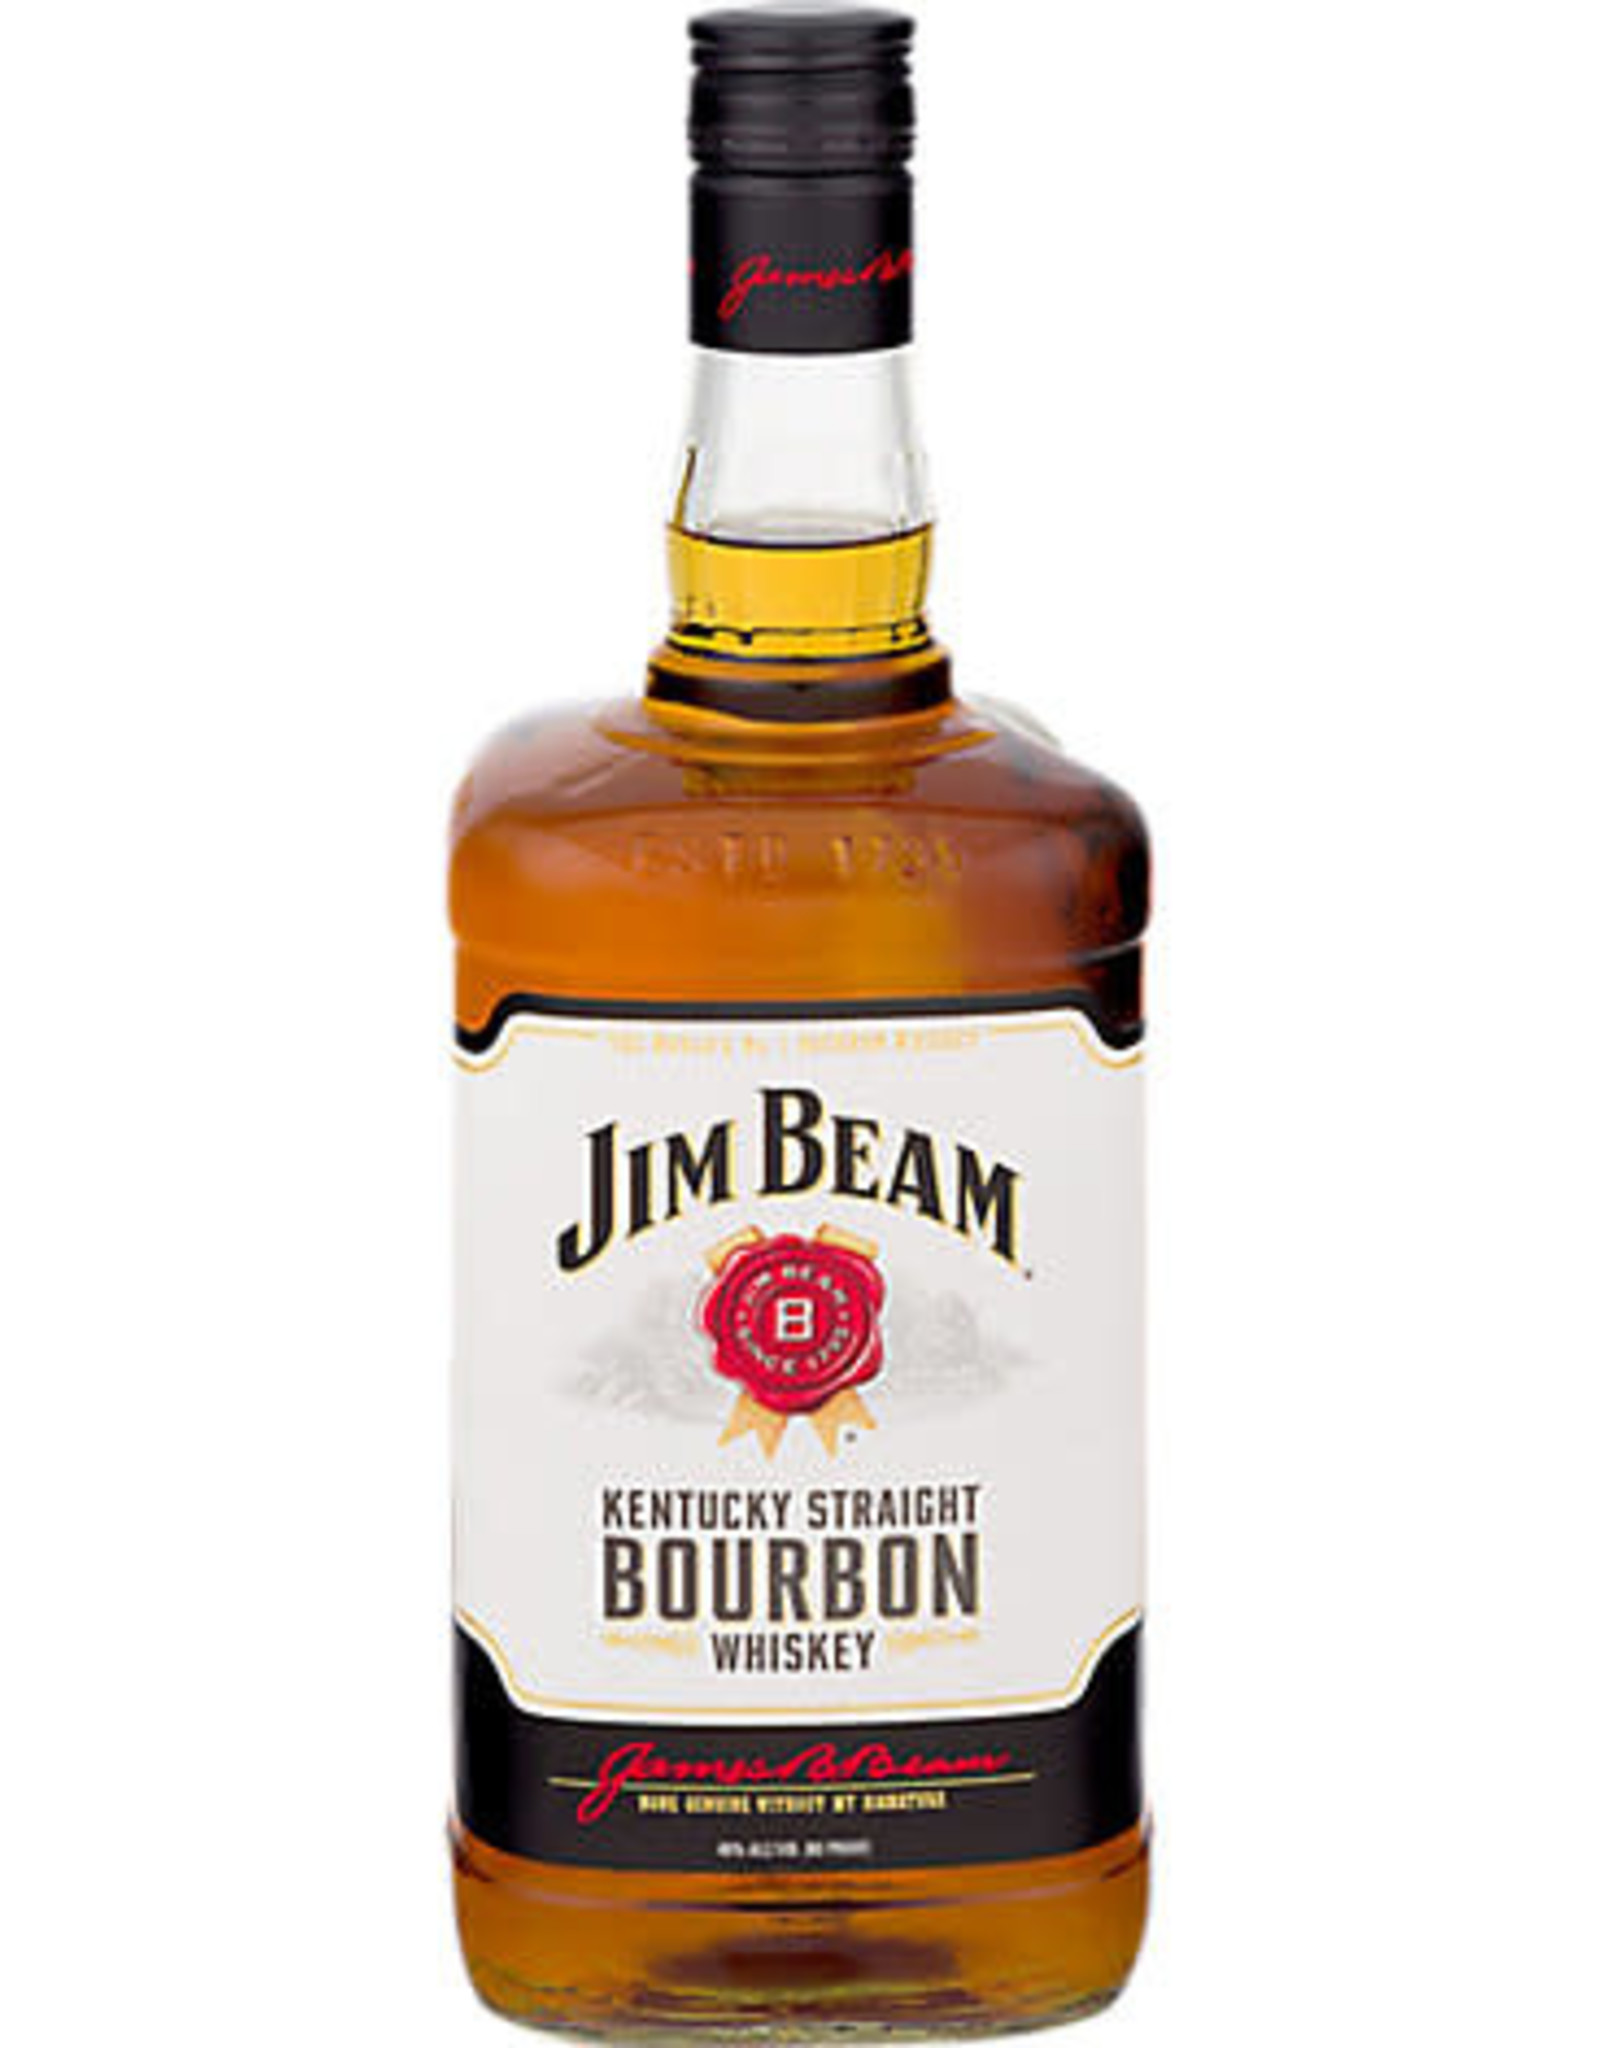 Jim Beam JIM BEAM - BOURBON - 80 PR - 4 YR - 1.75 L